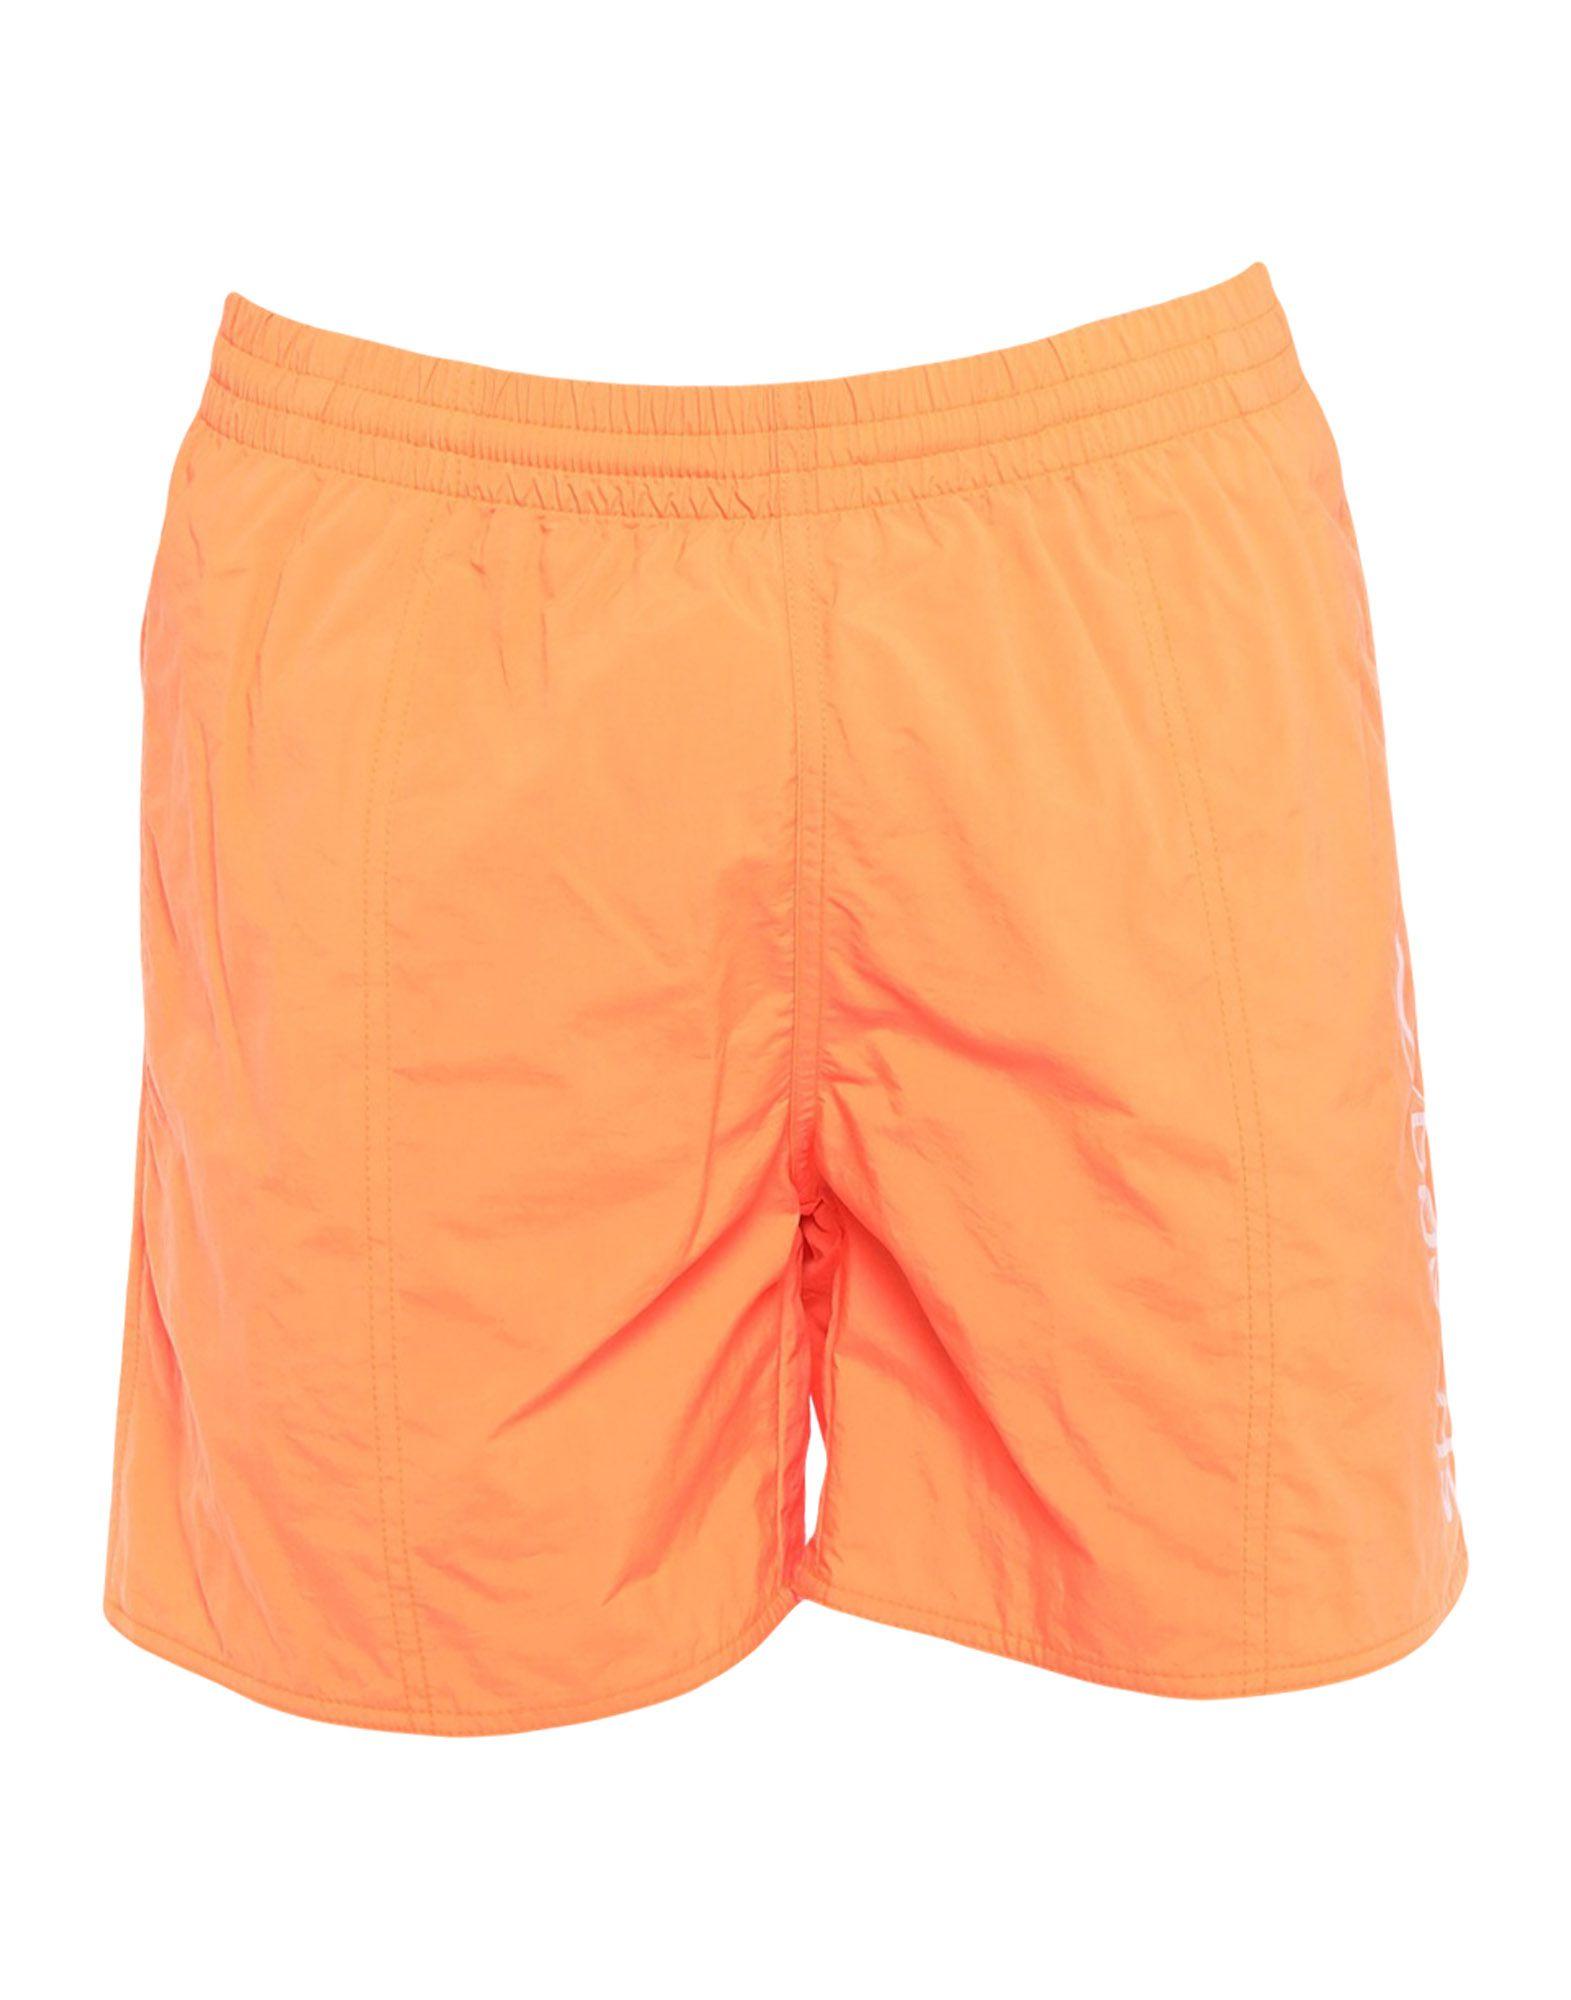 Speedo Synthetic Swim Trunks in Orange for Men - Save 26% - Lyst